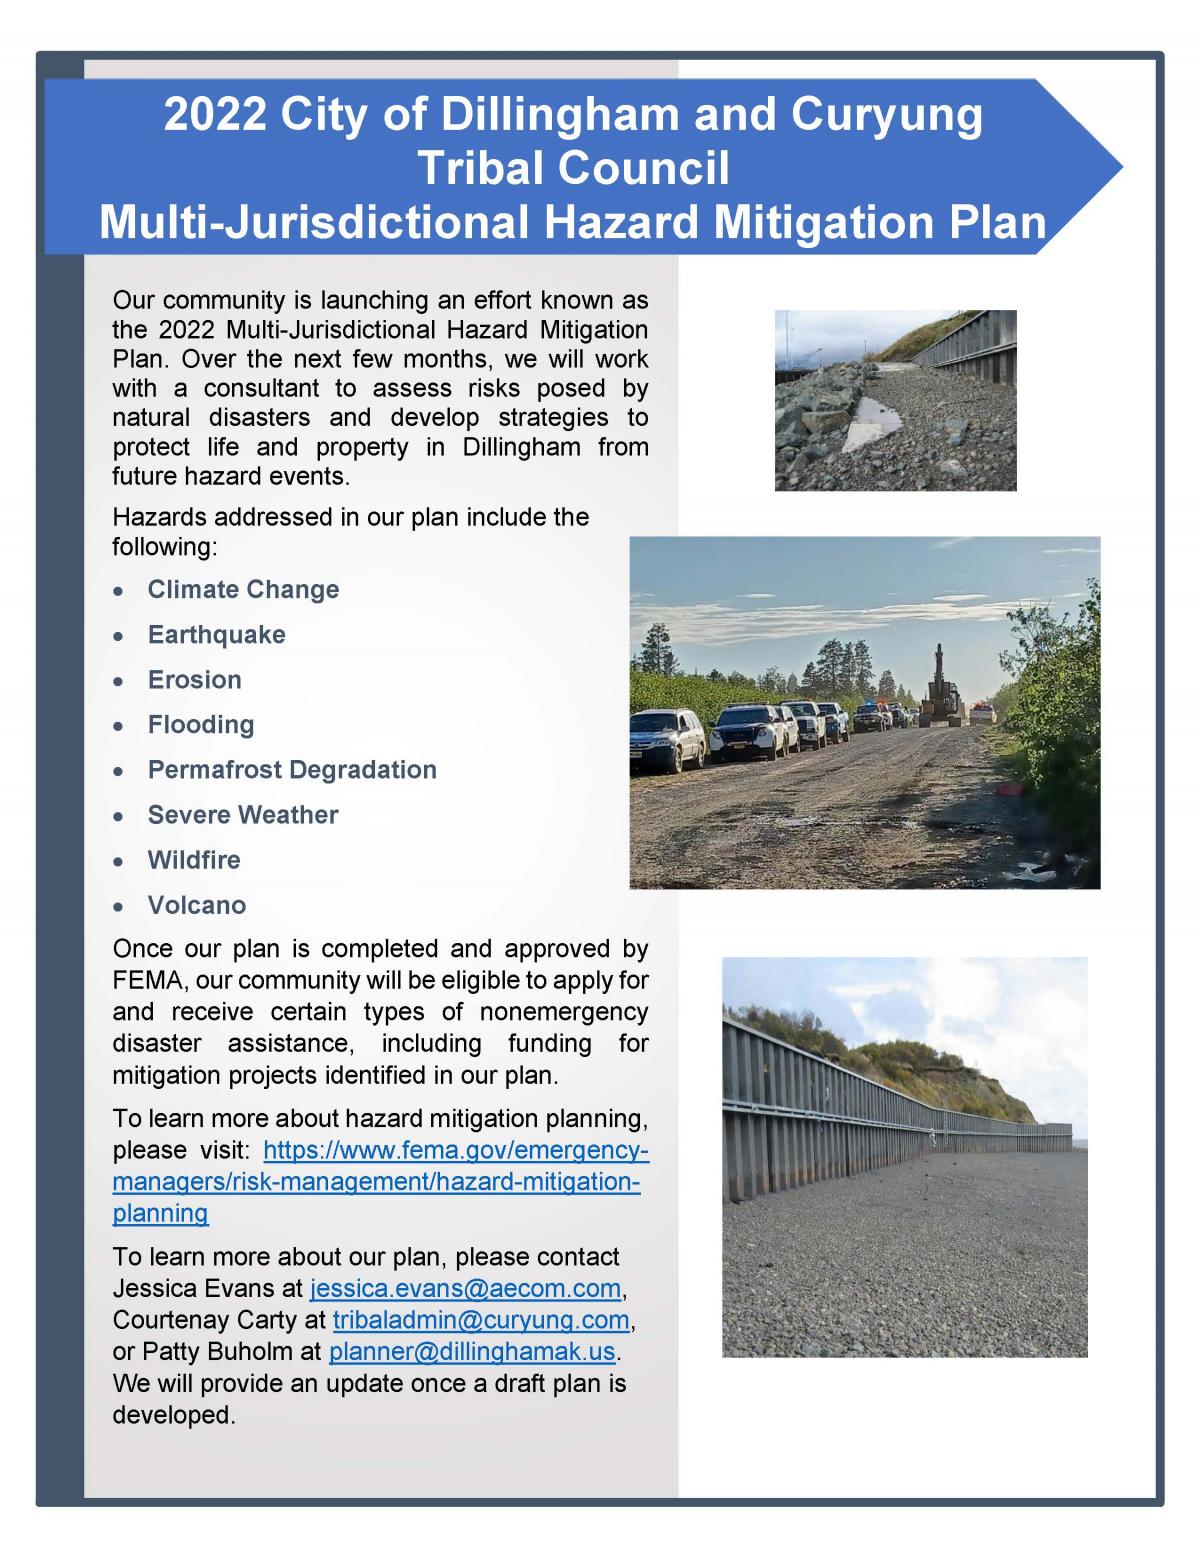 2022 City of Dillingham and Curyung Tribal Council Multi-Jurisdictional Hazard Mitigation Plan